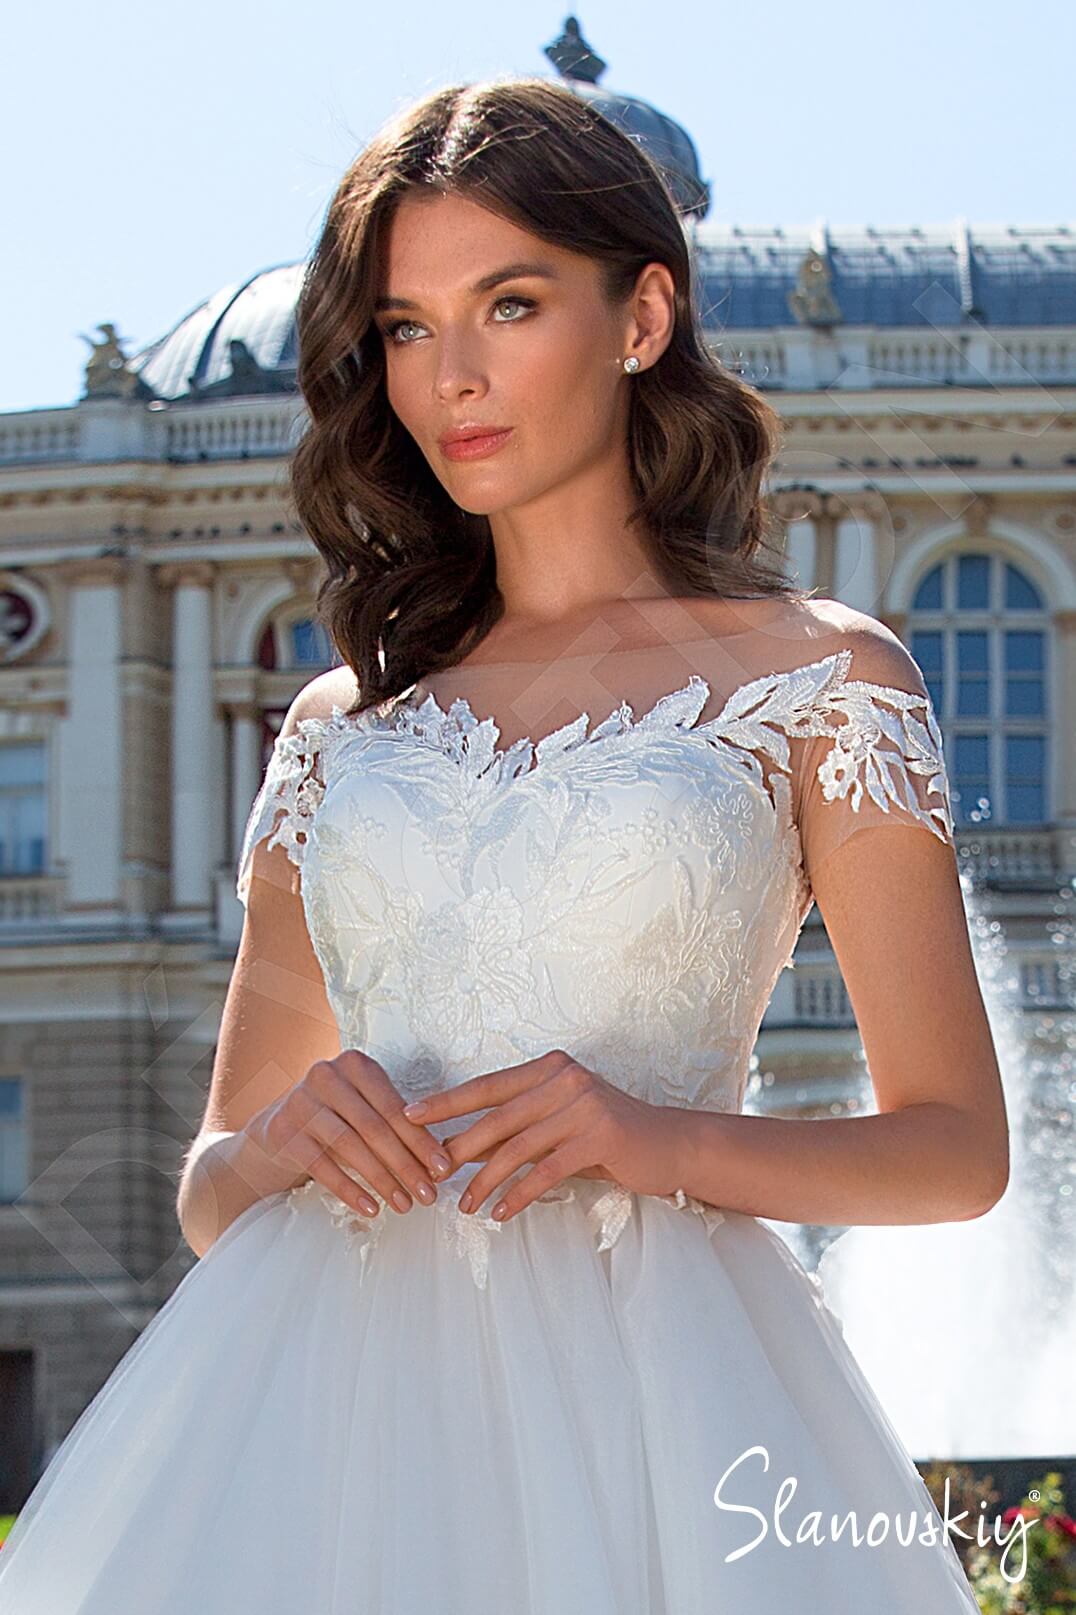 Manuela Full back Princess/Ball Gown Short/ Cap sleeve Wedding Dress 2